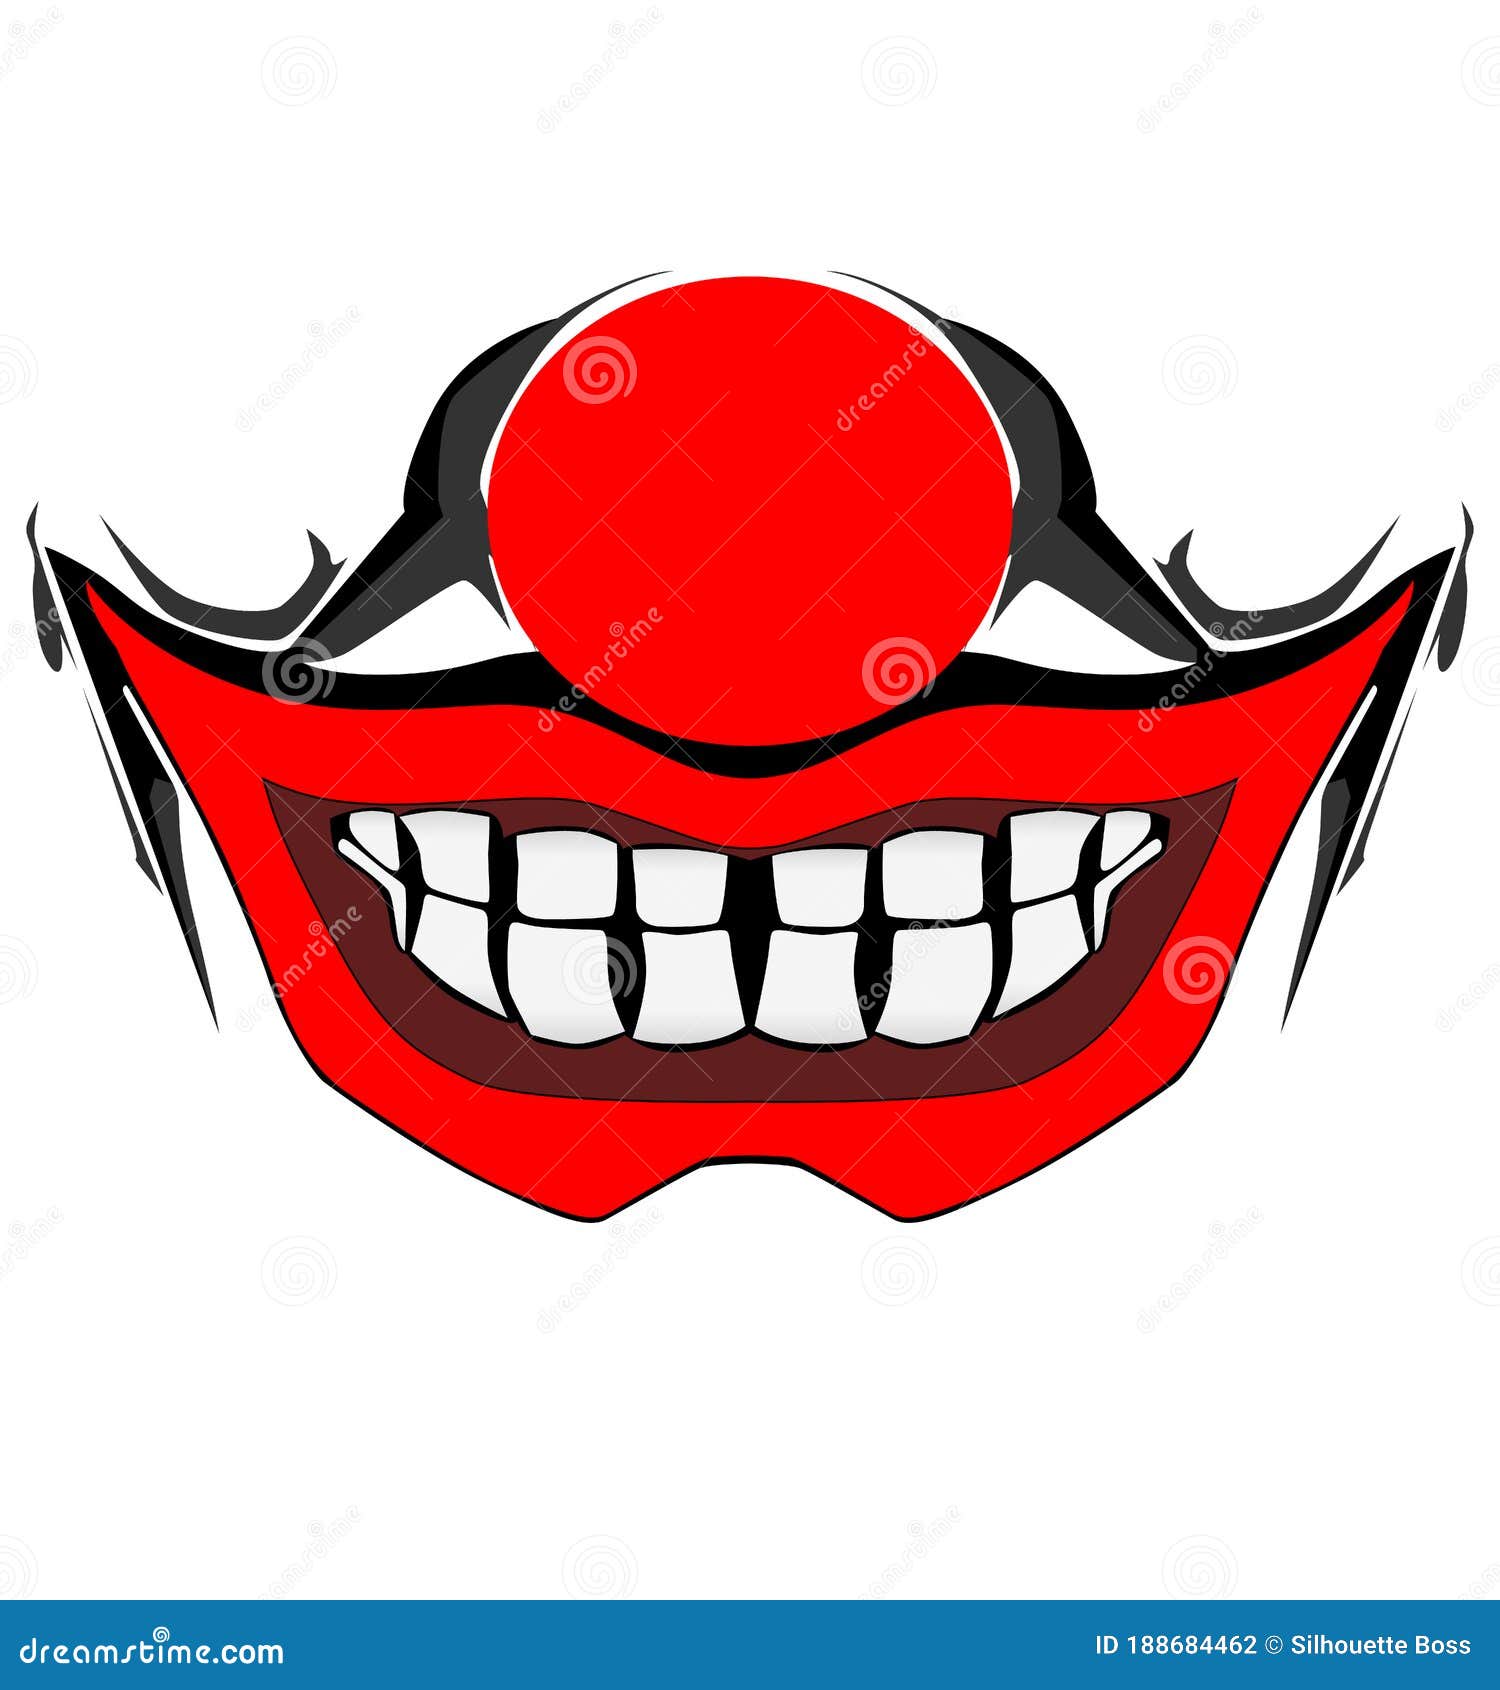 Download Clown Face Cartoon Vector | CartoonDealer.com #21978653